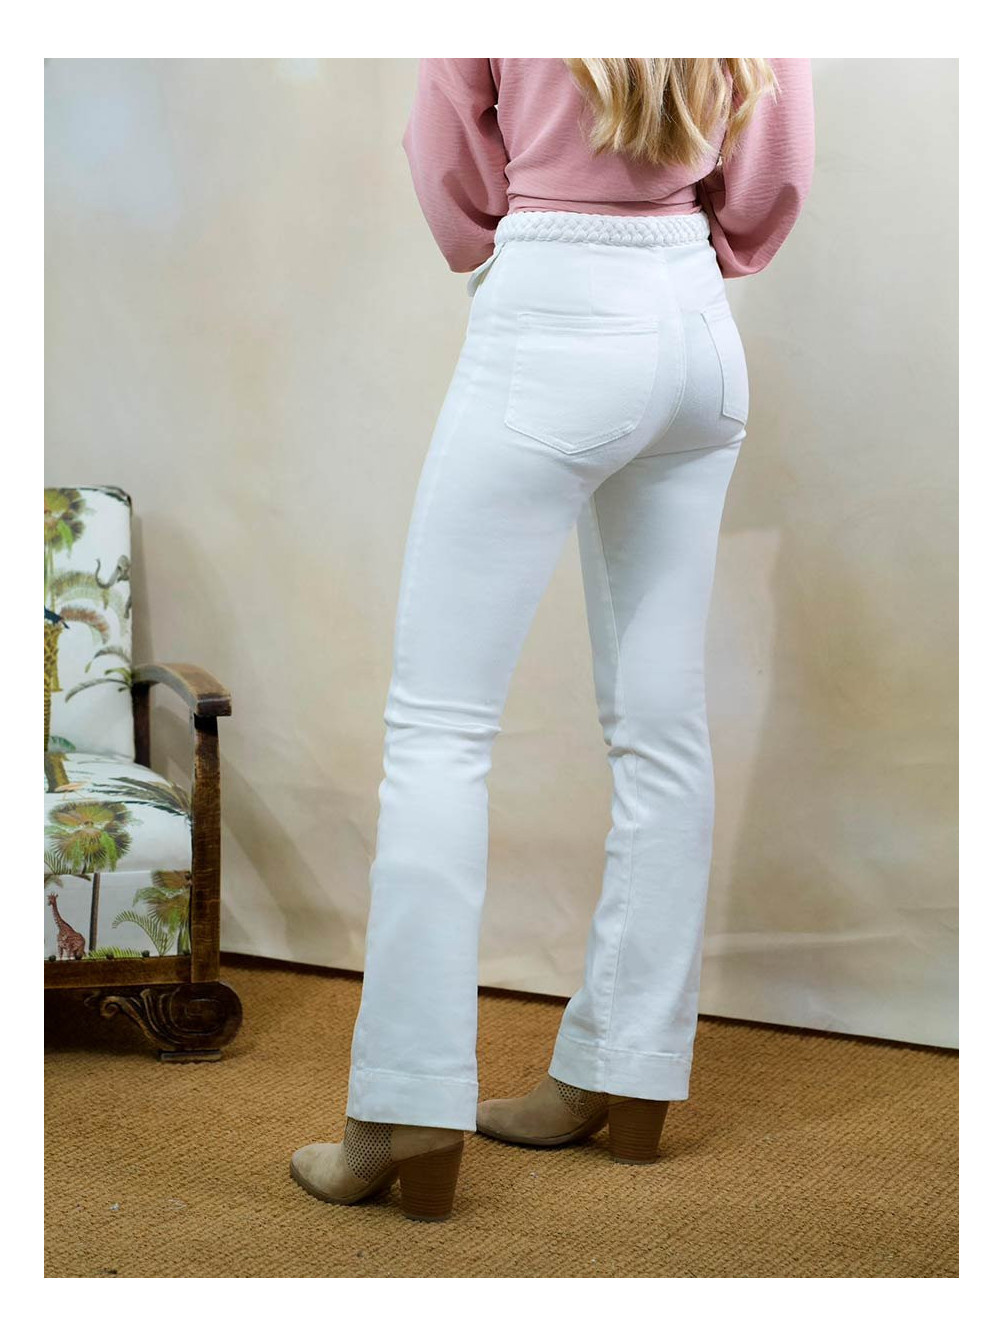 Jeans Cinturilla Jeans Blanco Mariquita Trasquilá